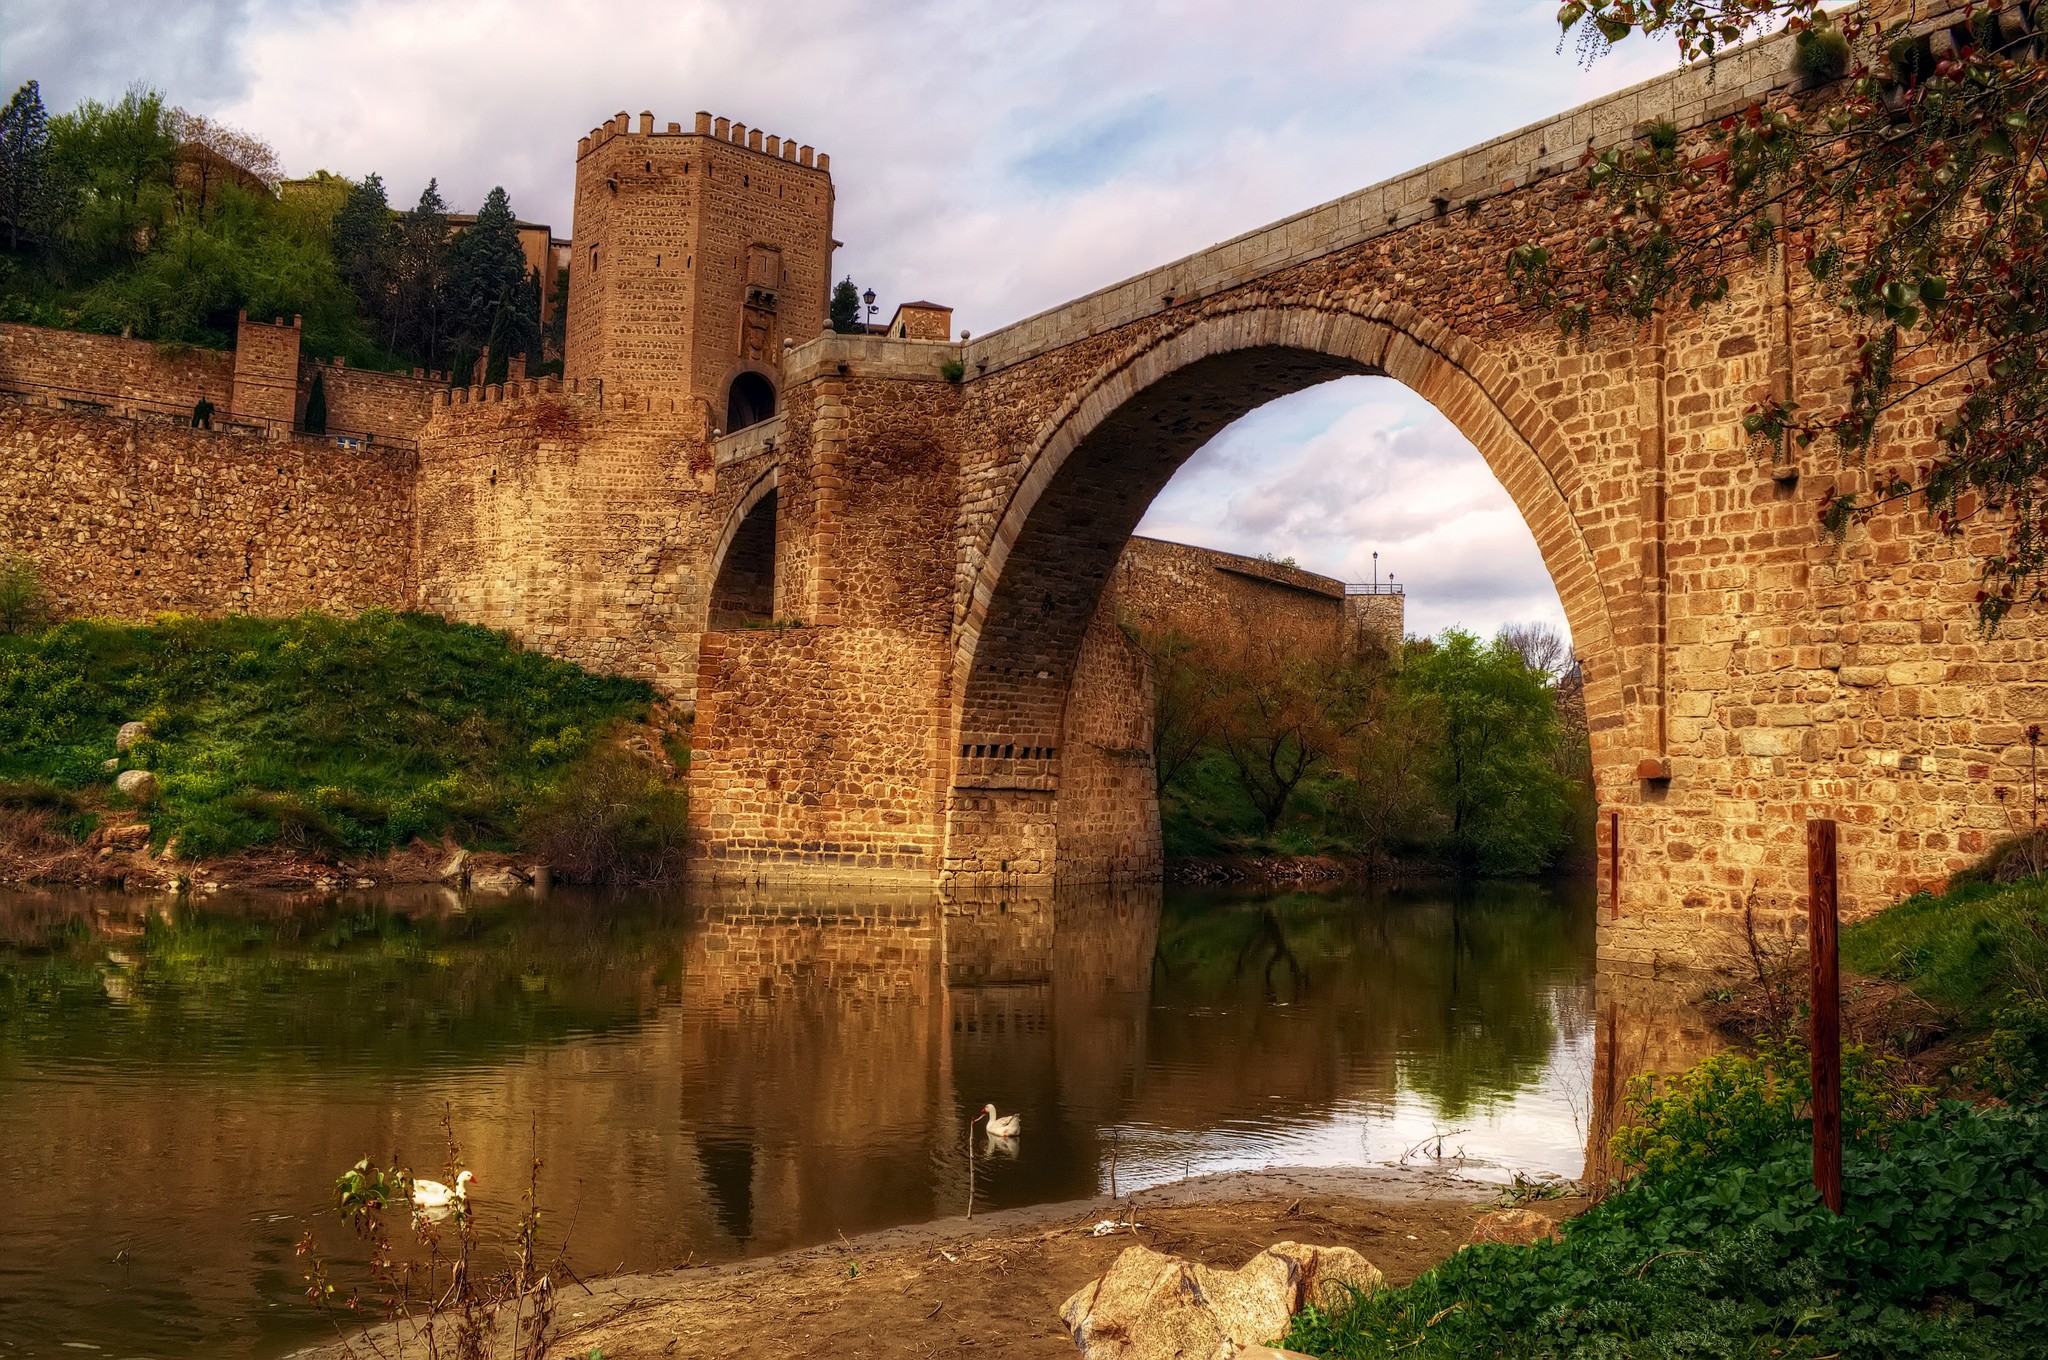 General 2048x1360 architecture nature clouds building water bridge castle Spain river trees tower swans